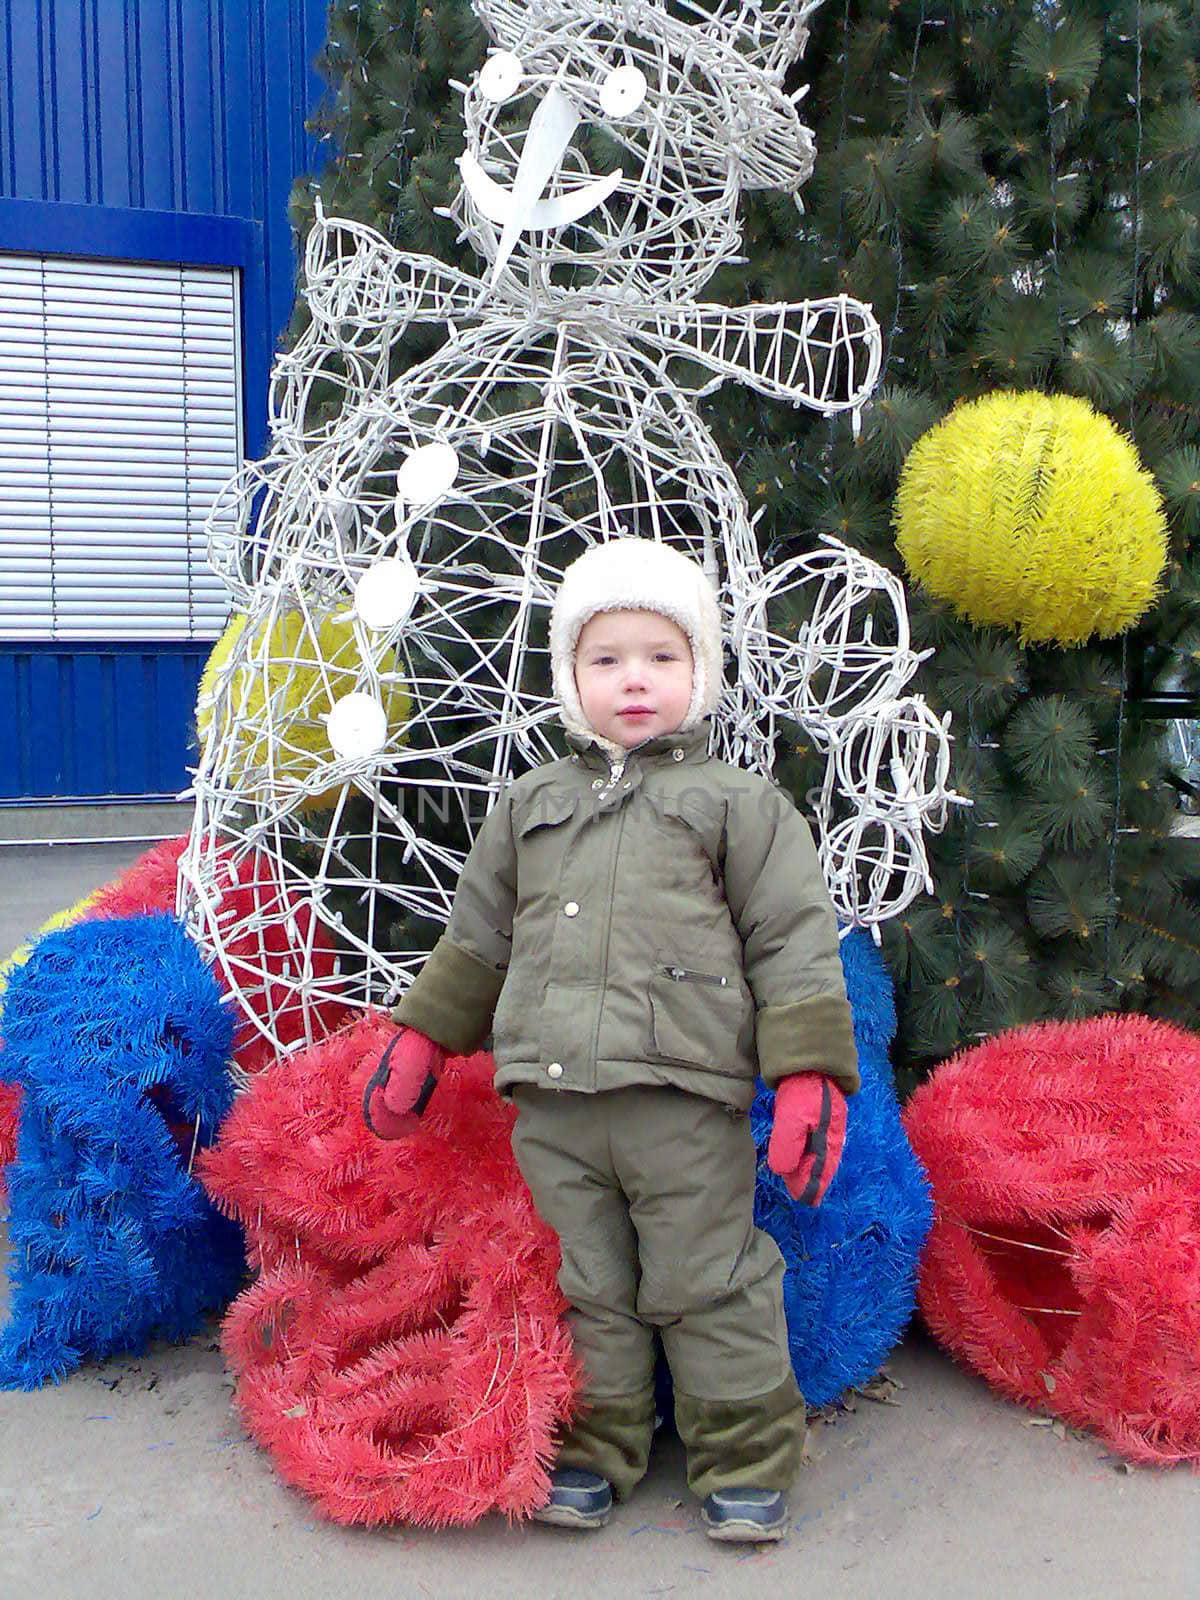 The kid next to the Christmas Tree